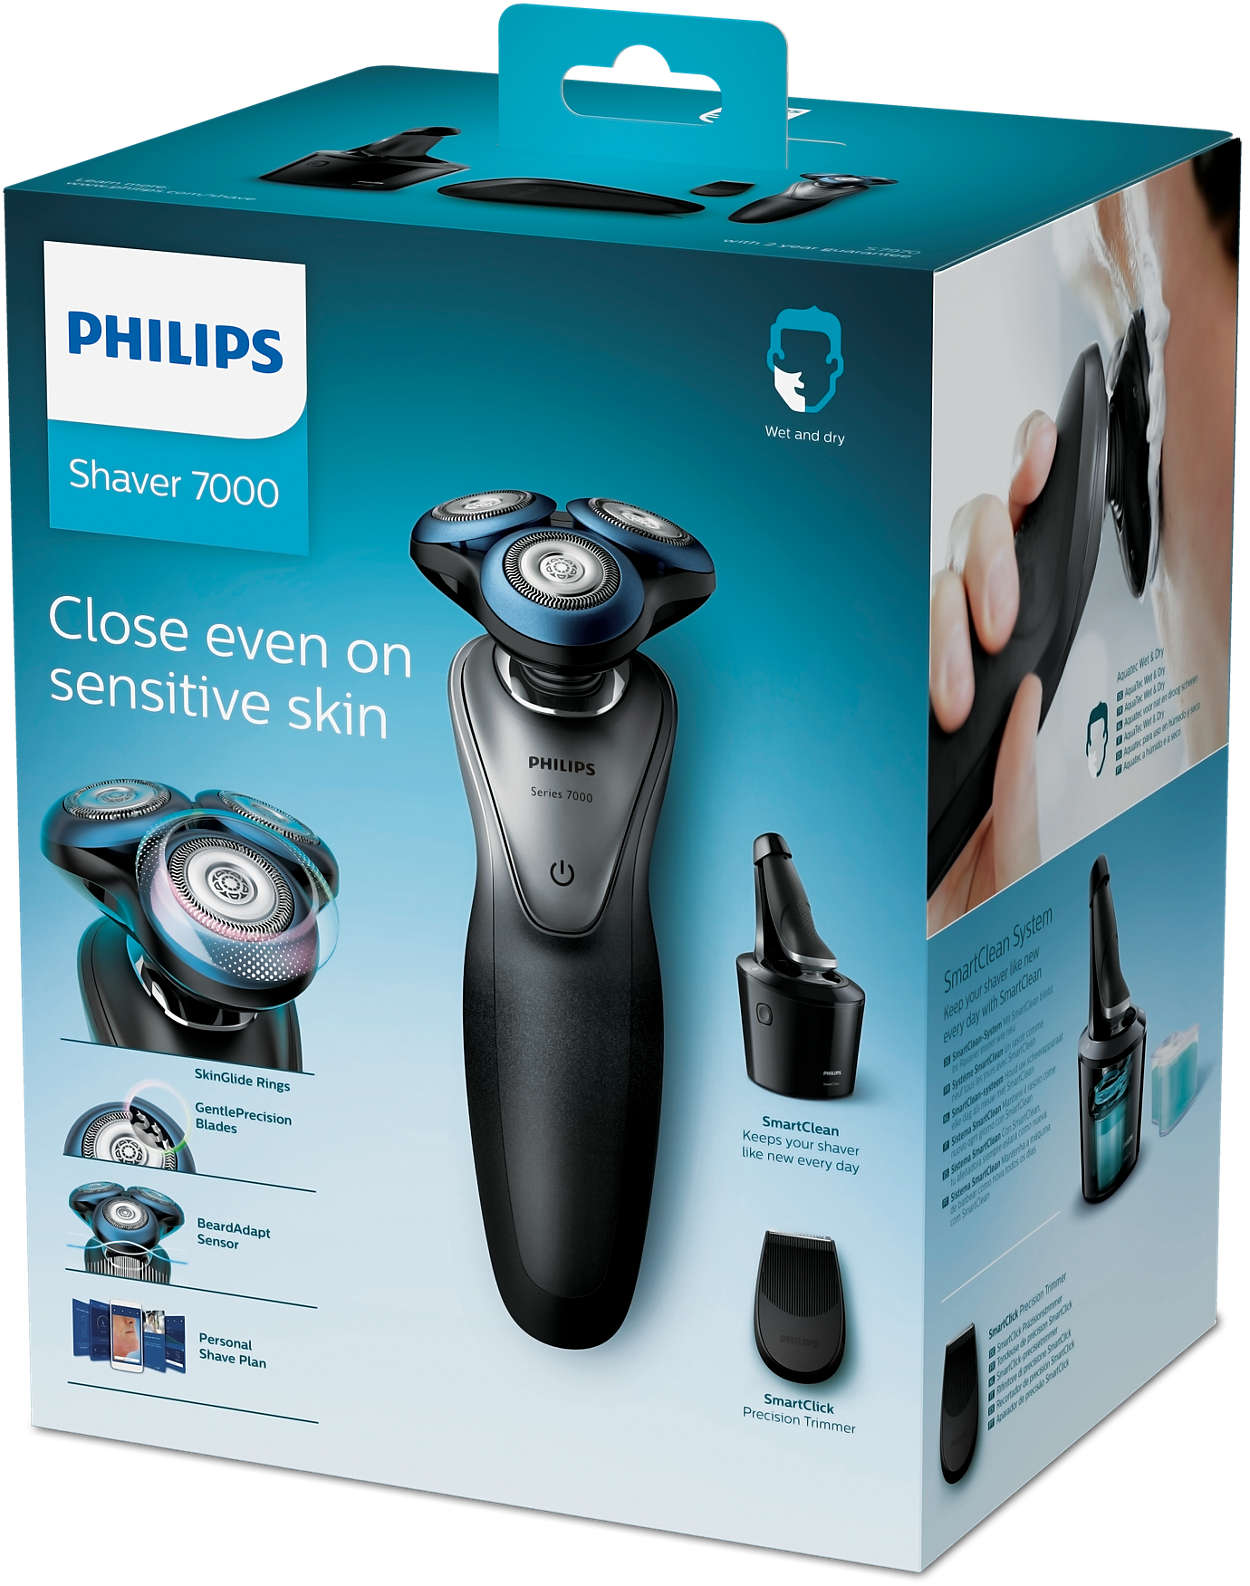 Филипс series 7000. Philips Series 7000. Филипс Shaver 7000. Электробритва Philips 7000. Насадки для бритвы Philips Series 7000.